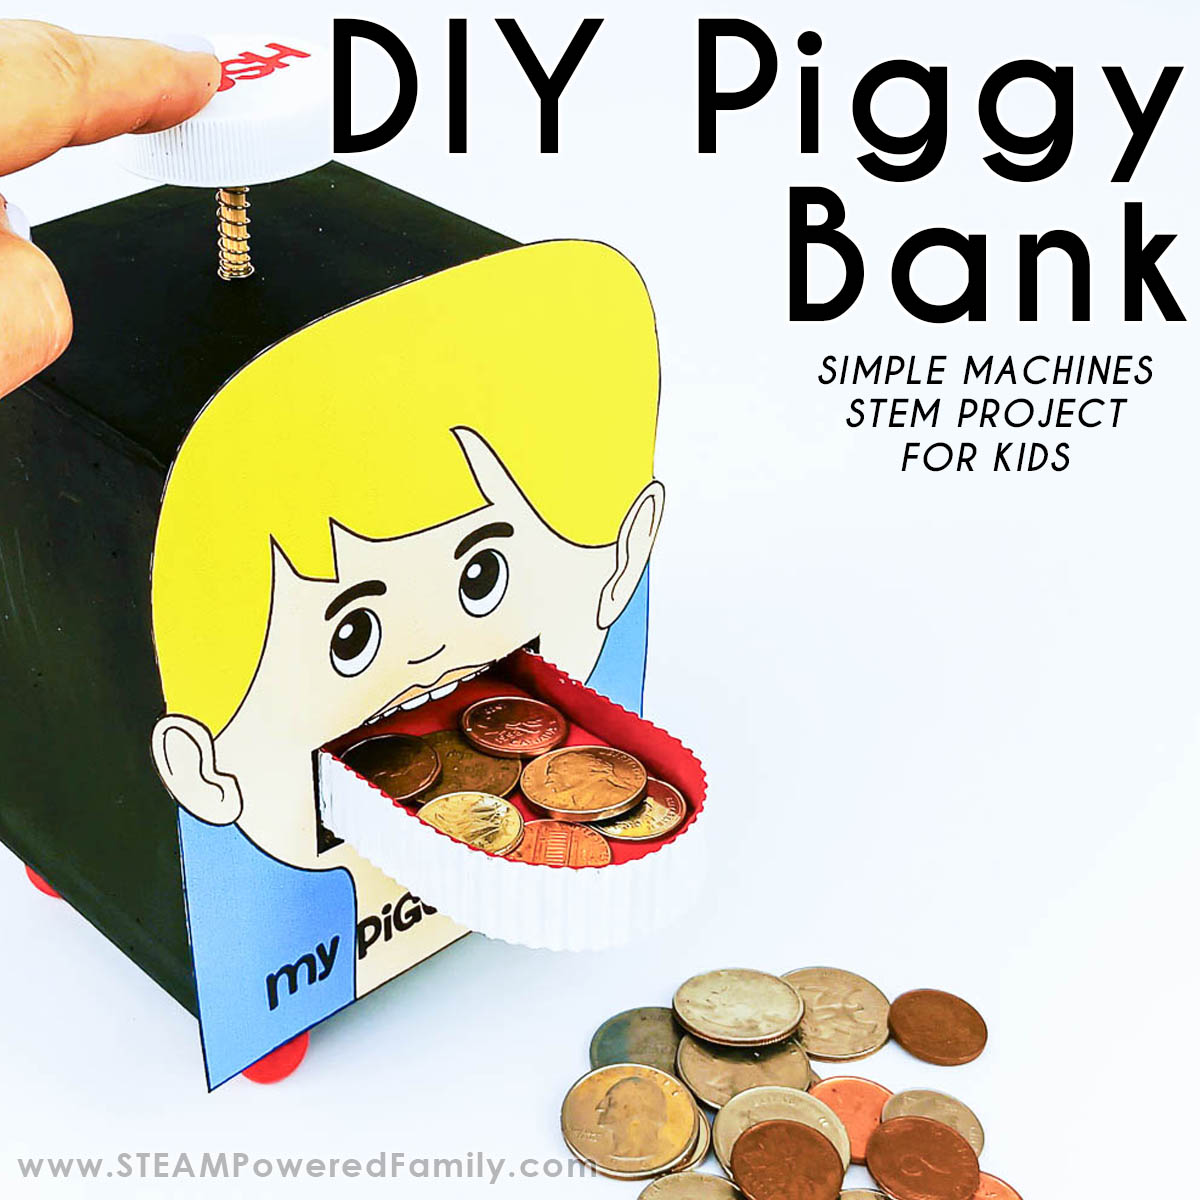 DIY Piggy Bank STEM Project